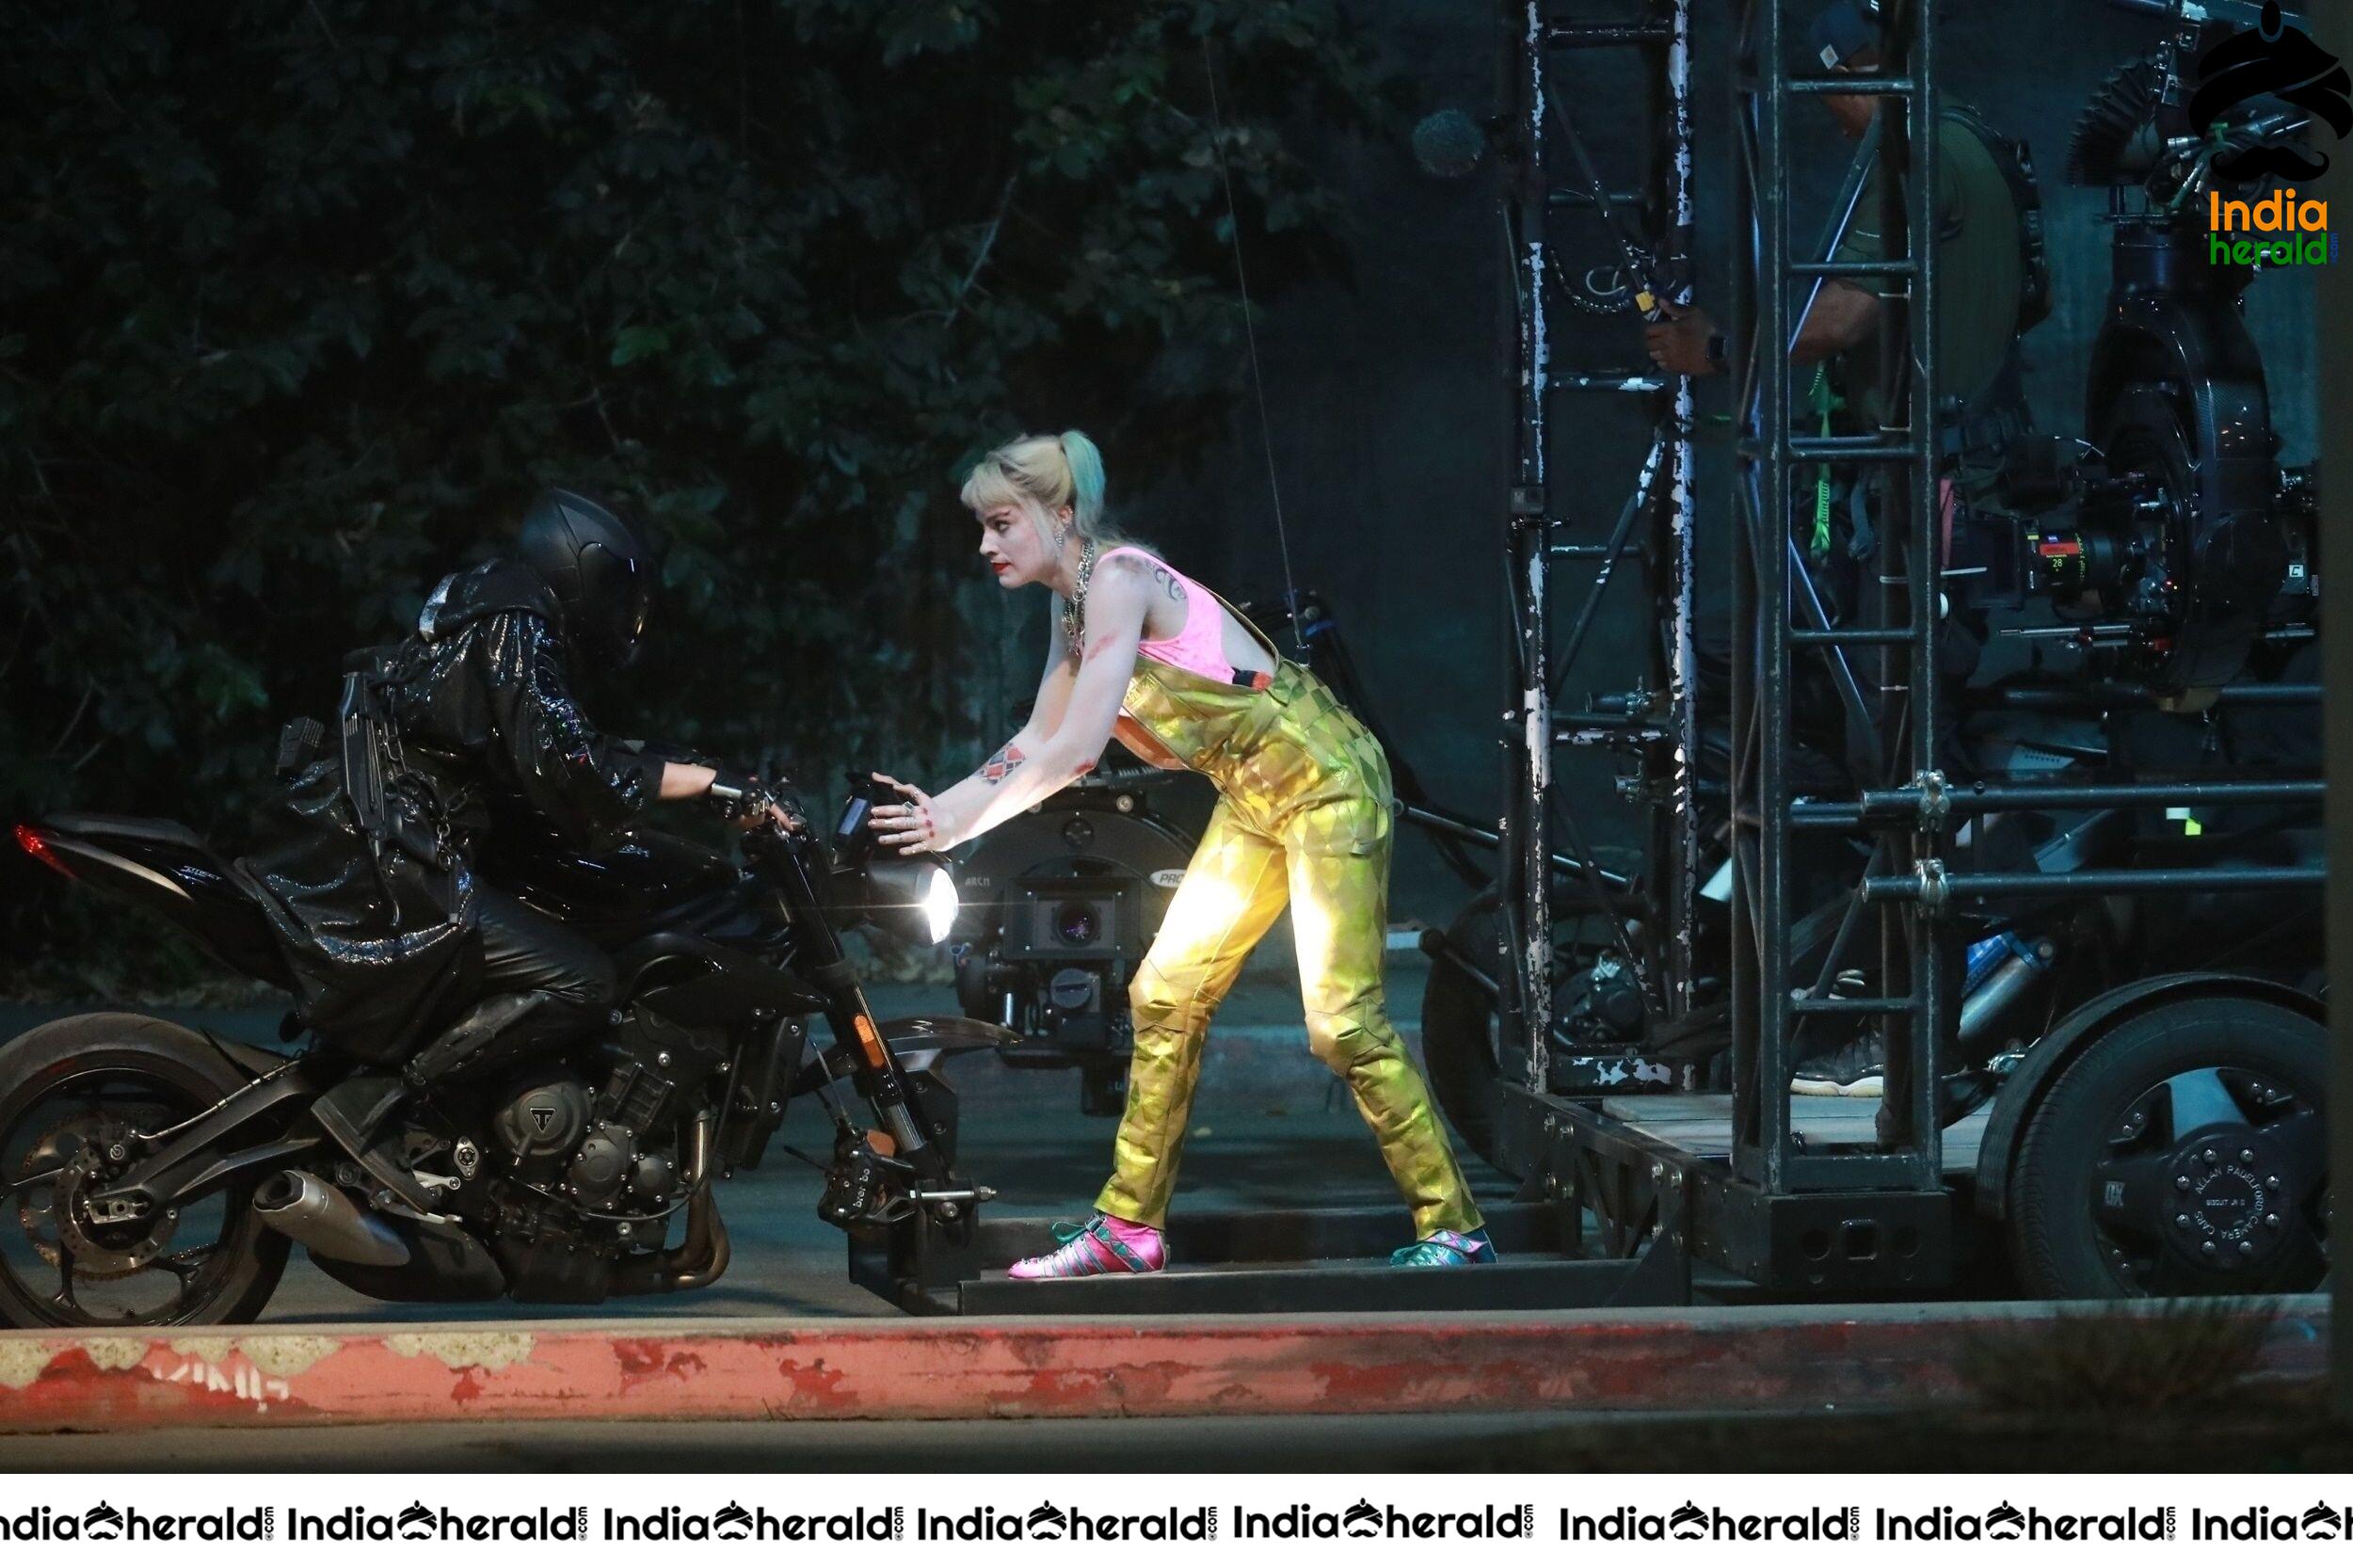 India Herald Exclusive Margot Robbie On The Sets Of Birds Of Prey At LA Set 3